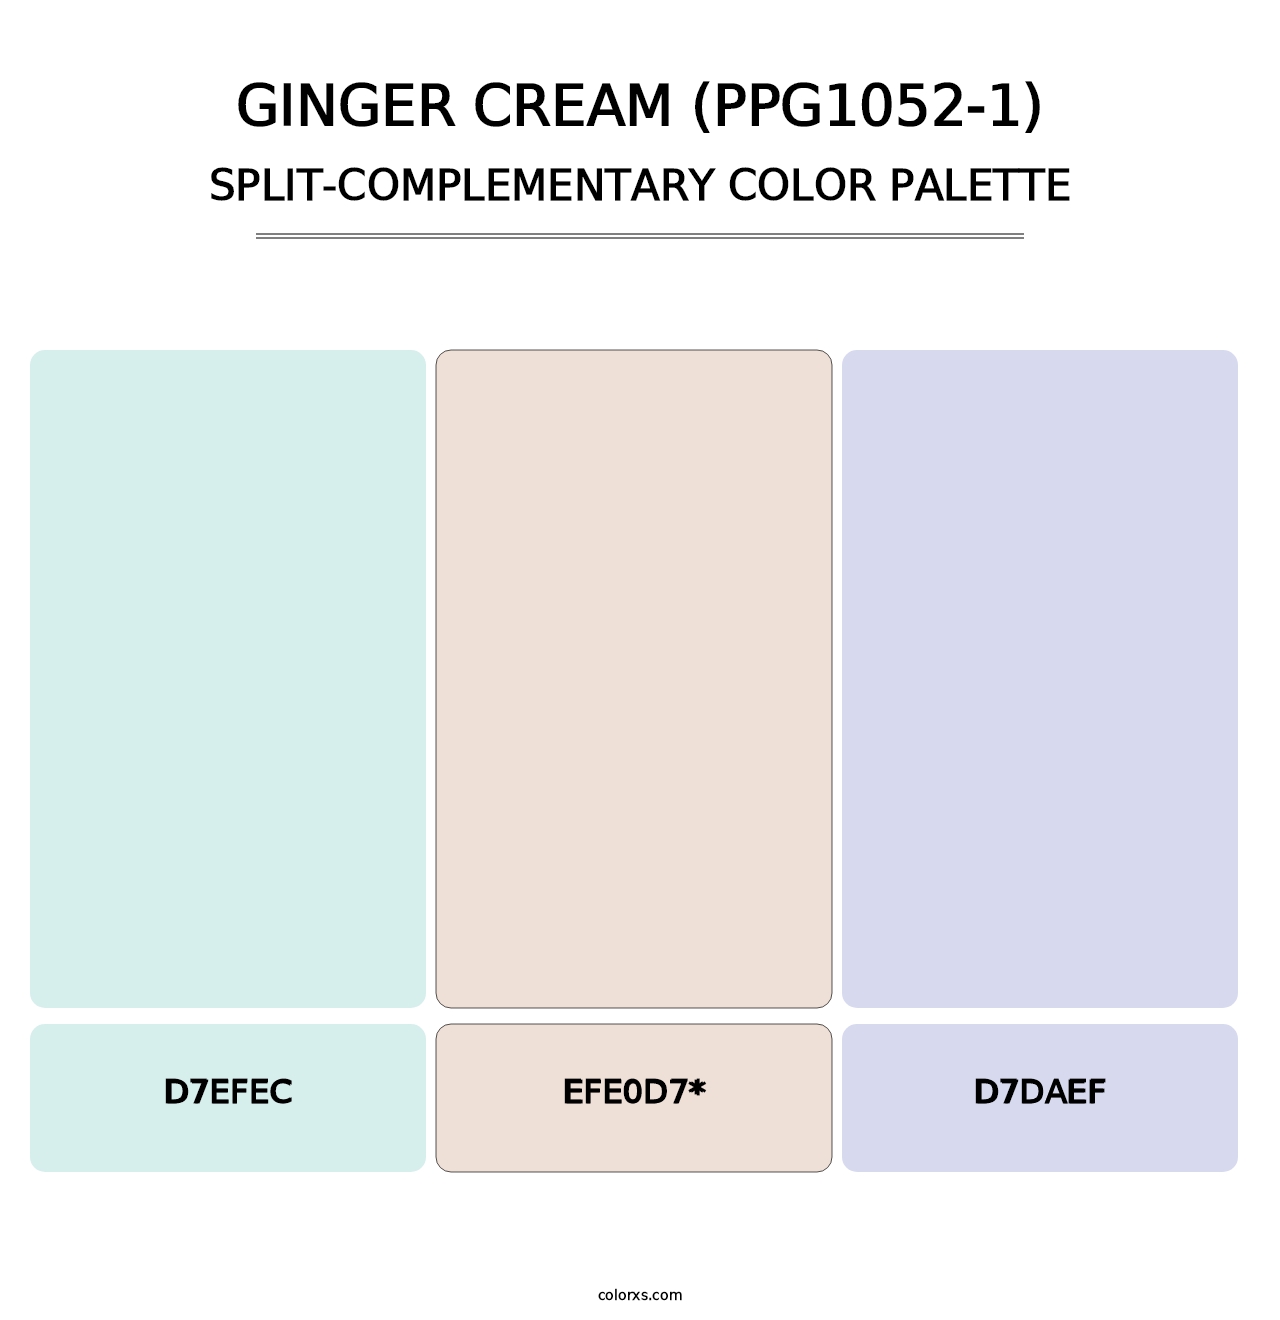 Ginger Cream (PPG1052-1) - Split-Complementary Color Palette